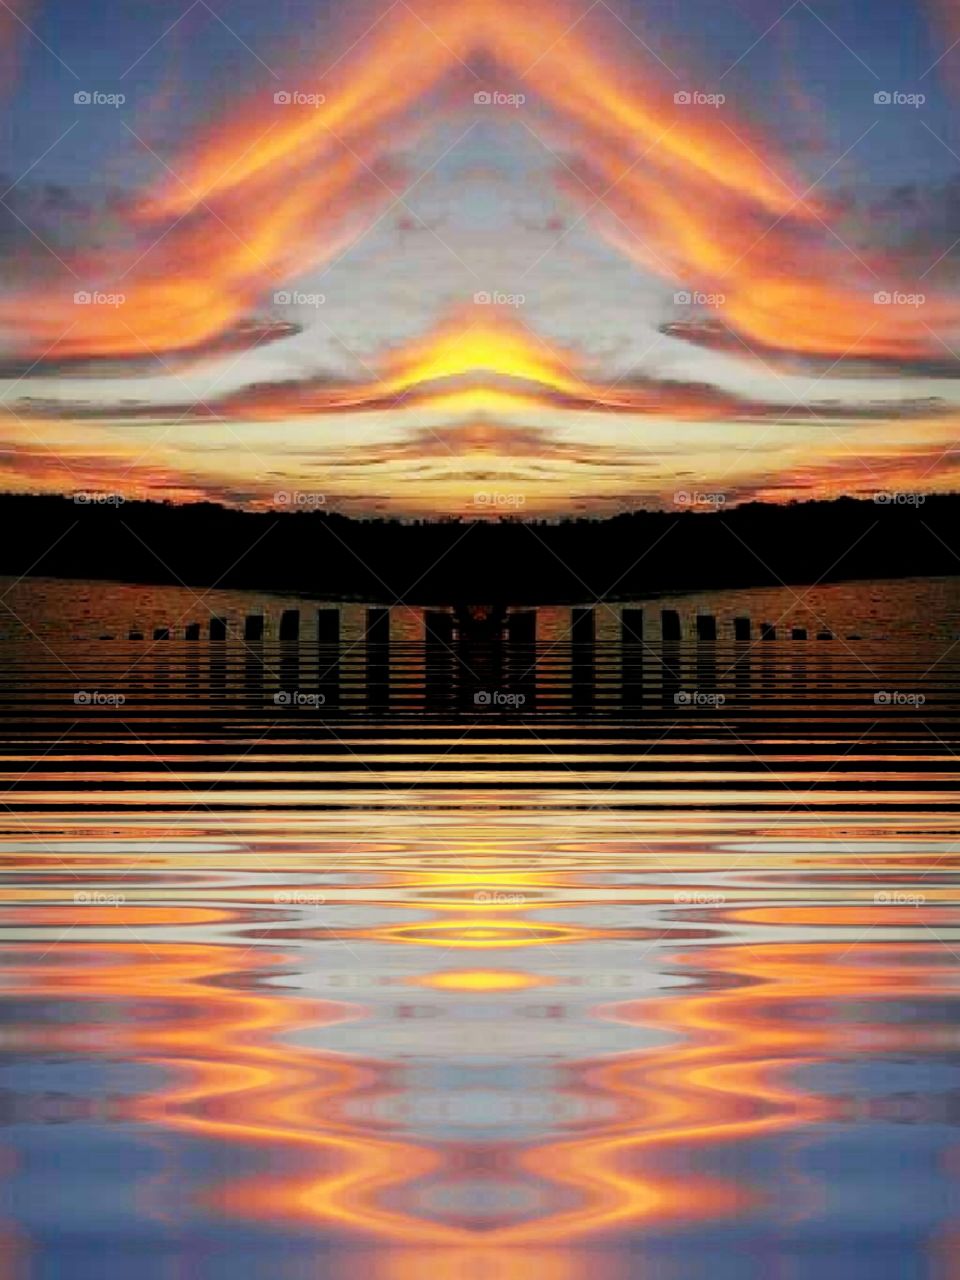 mirrored and rippled sunset over salt marsh